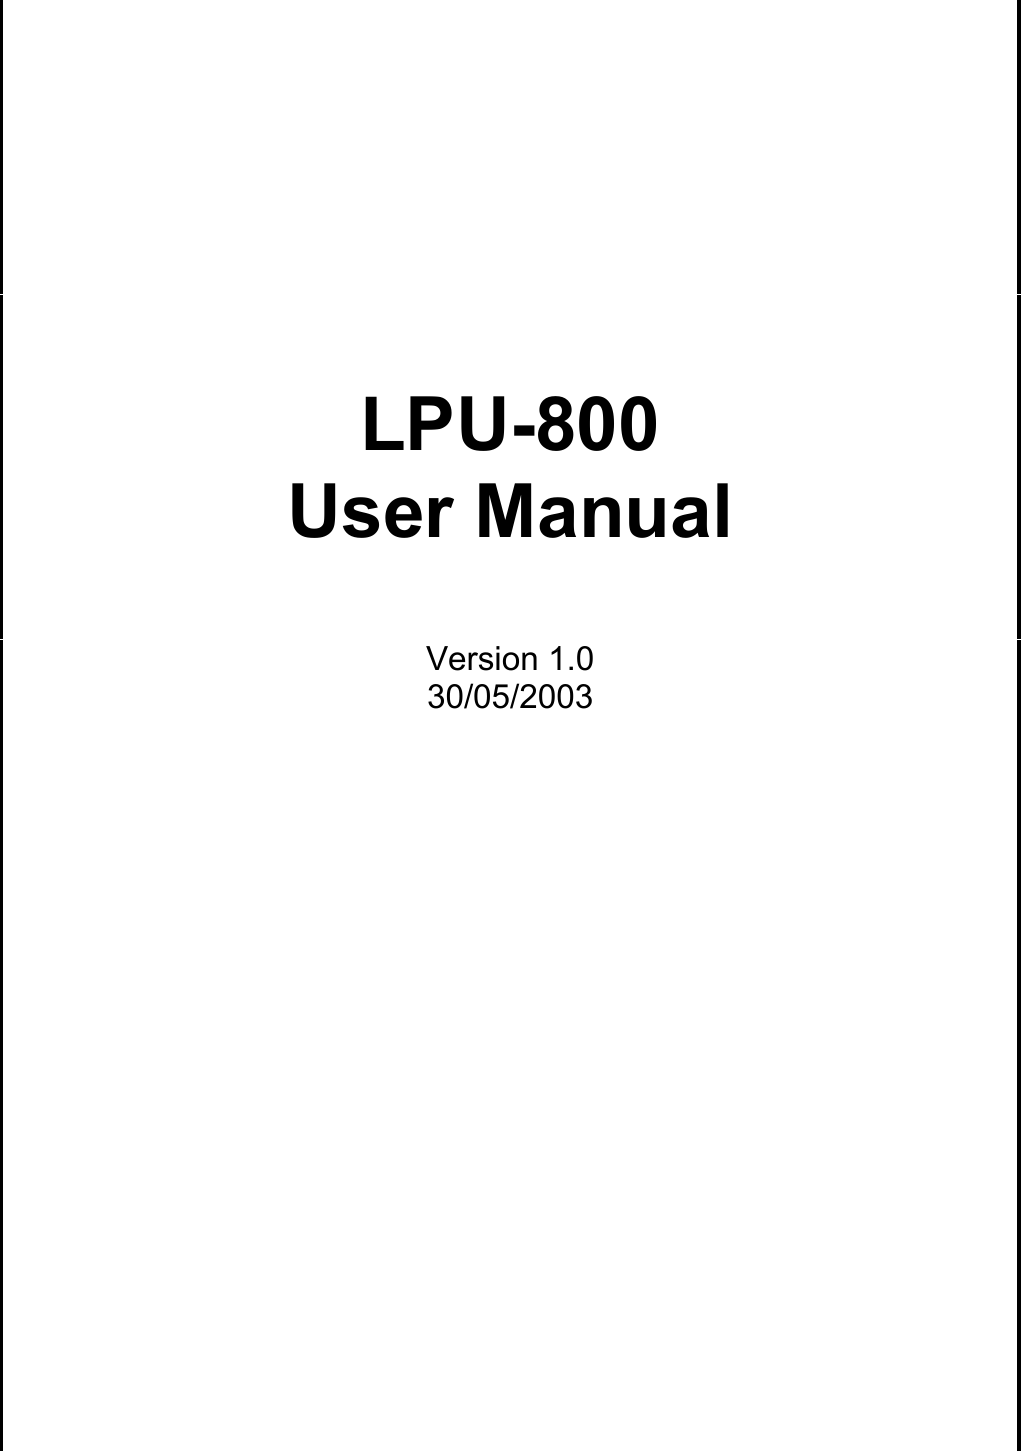          LPU-800 User Manual  Version 1.0 30/05/2003                         